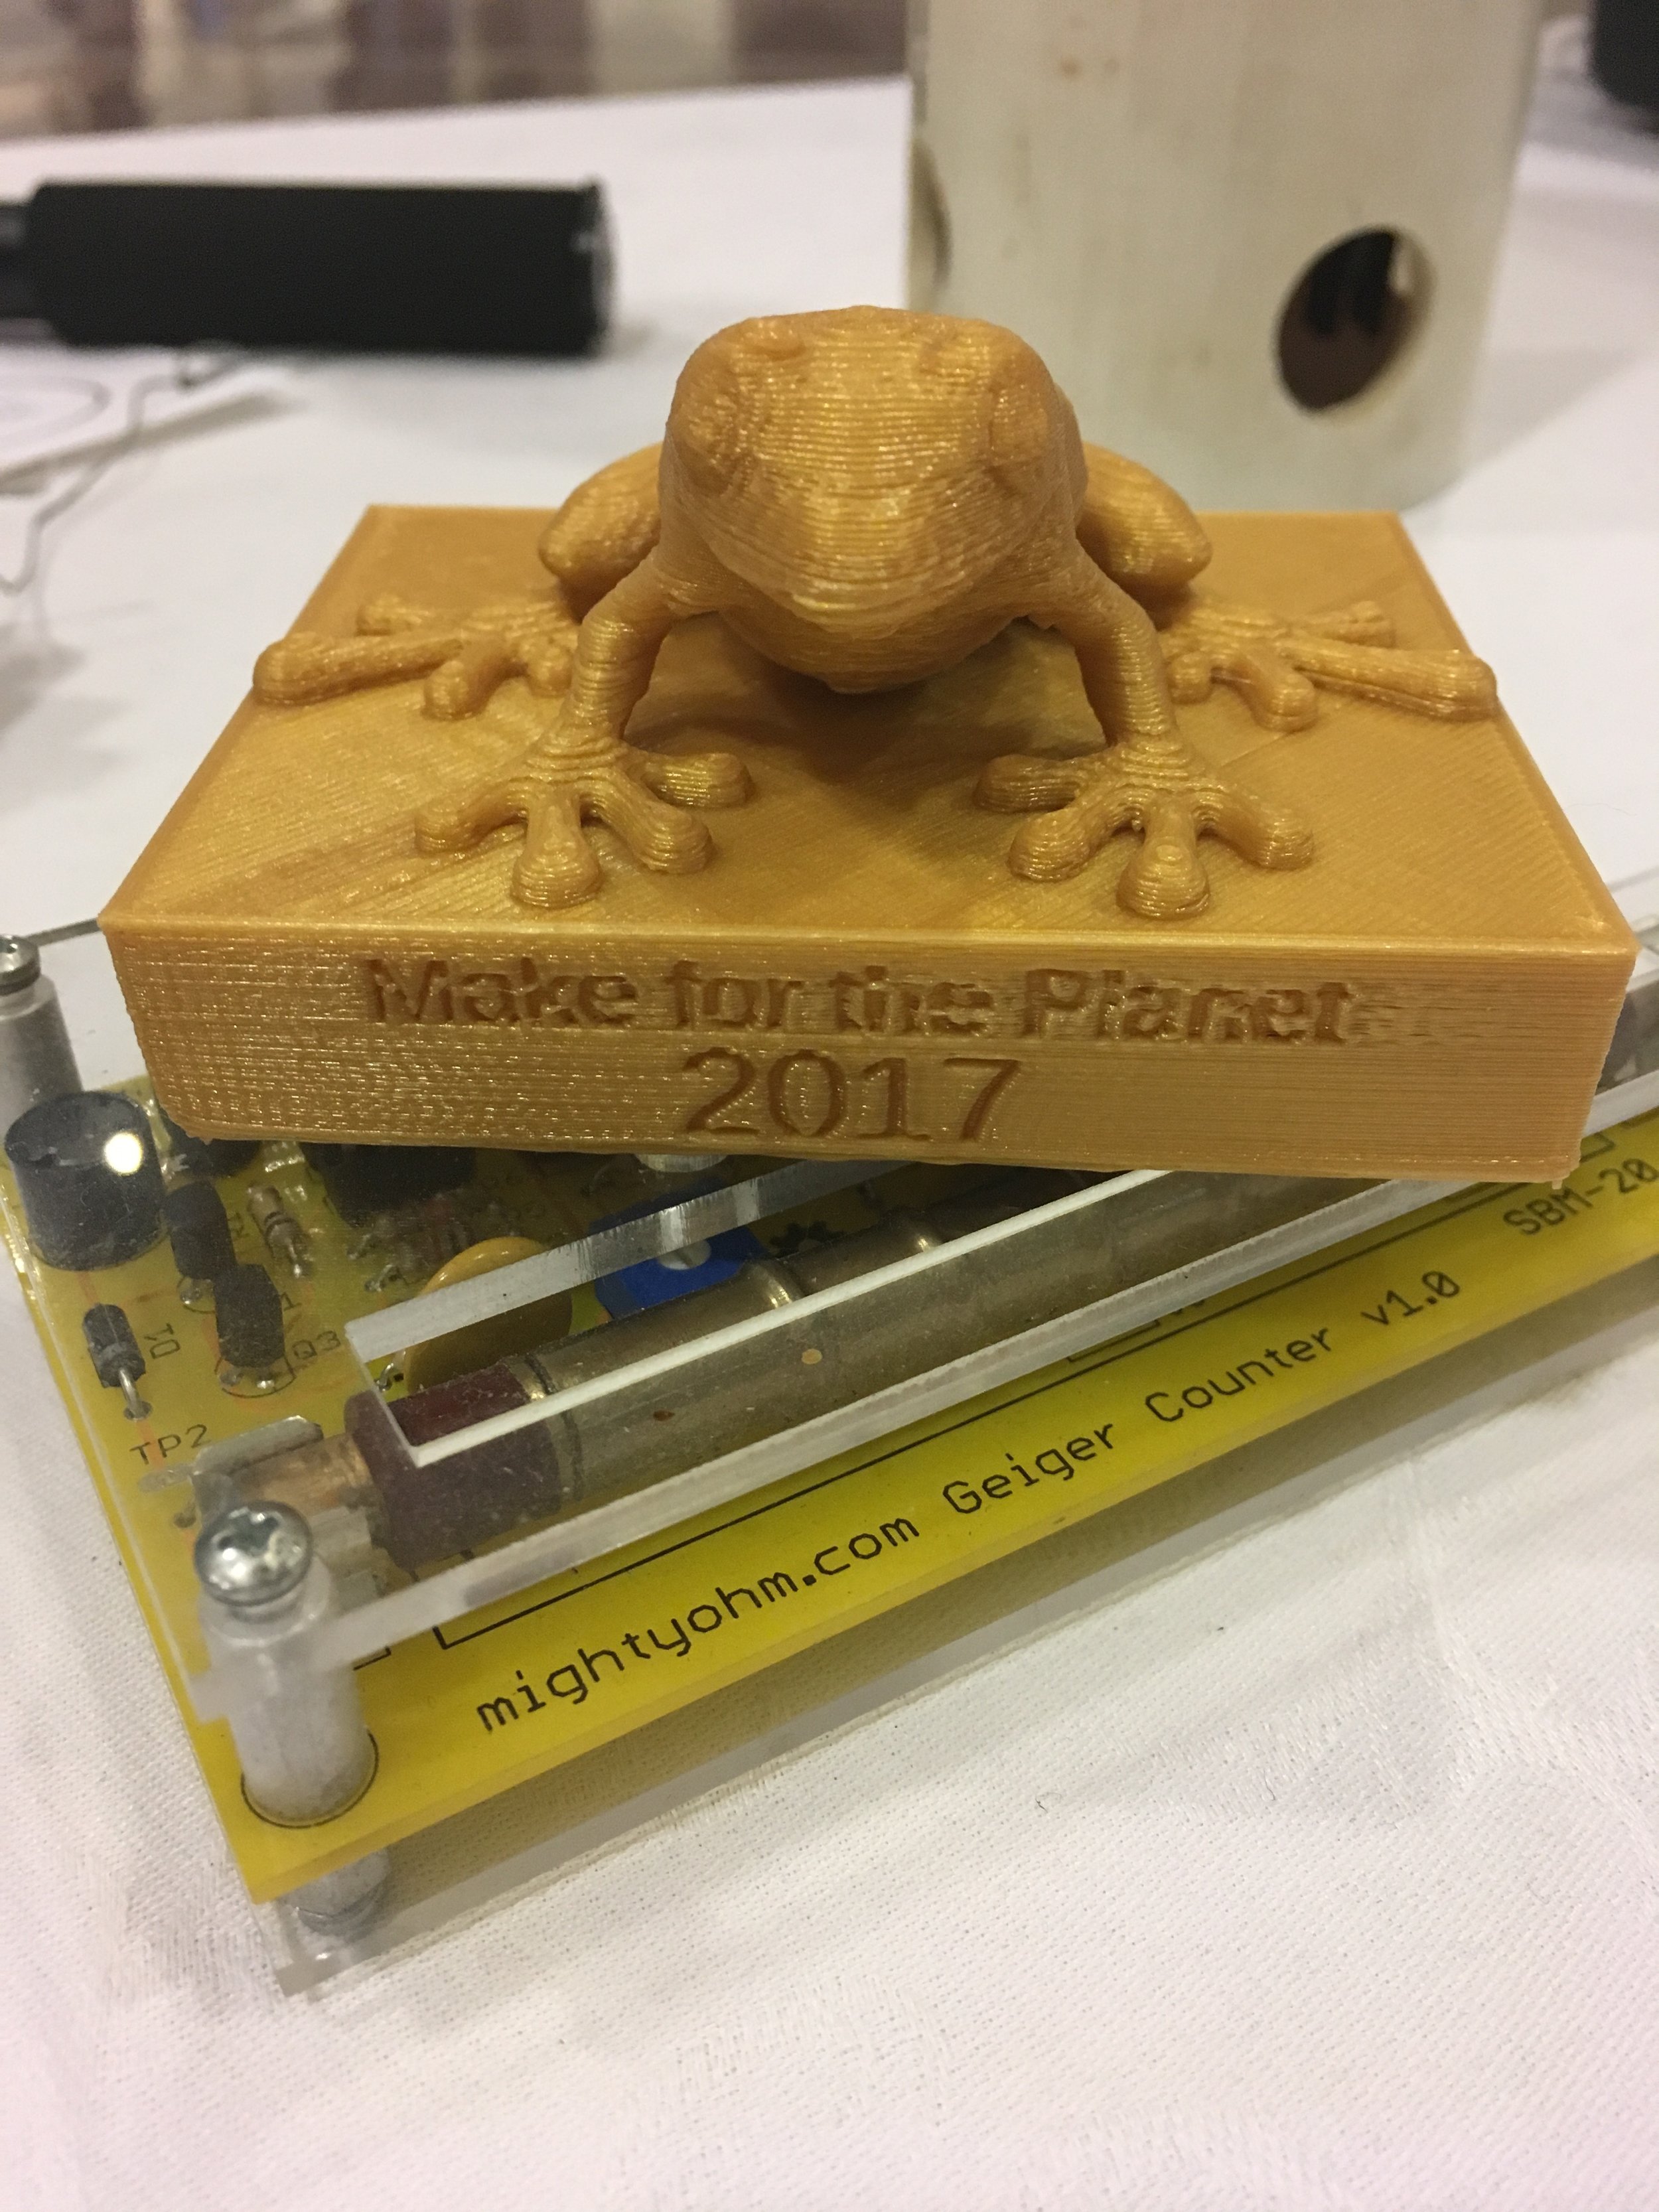 The Golden Frog 3D printed trophy